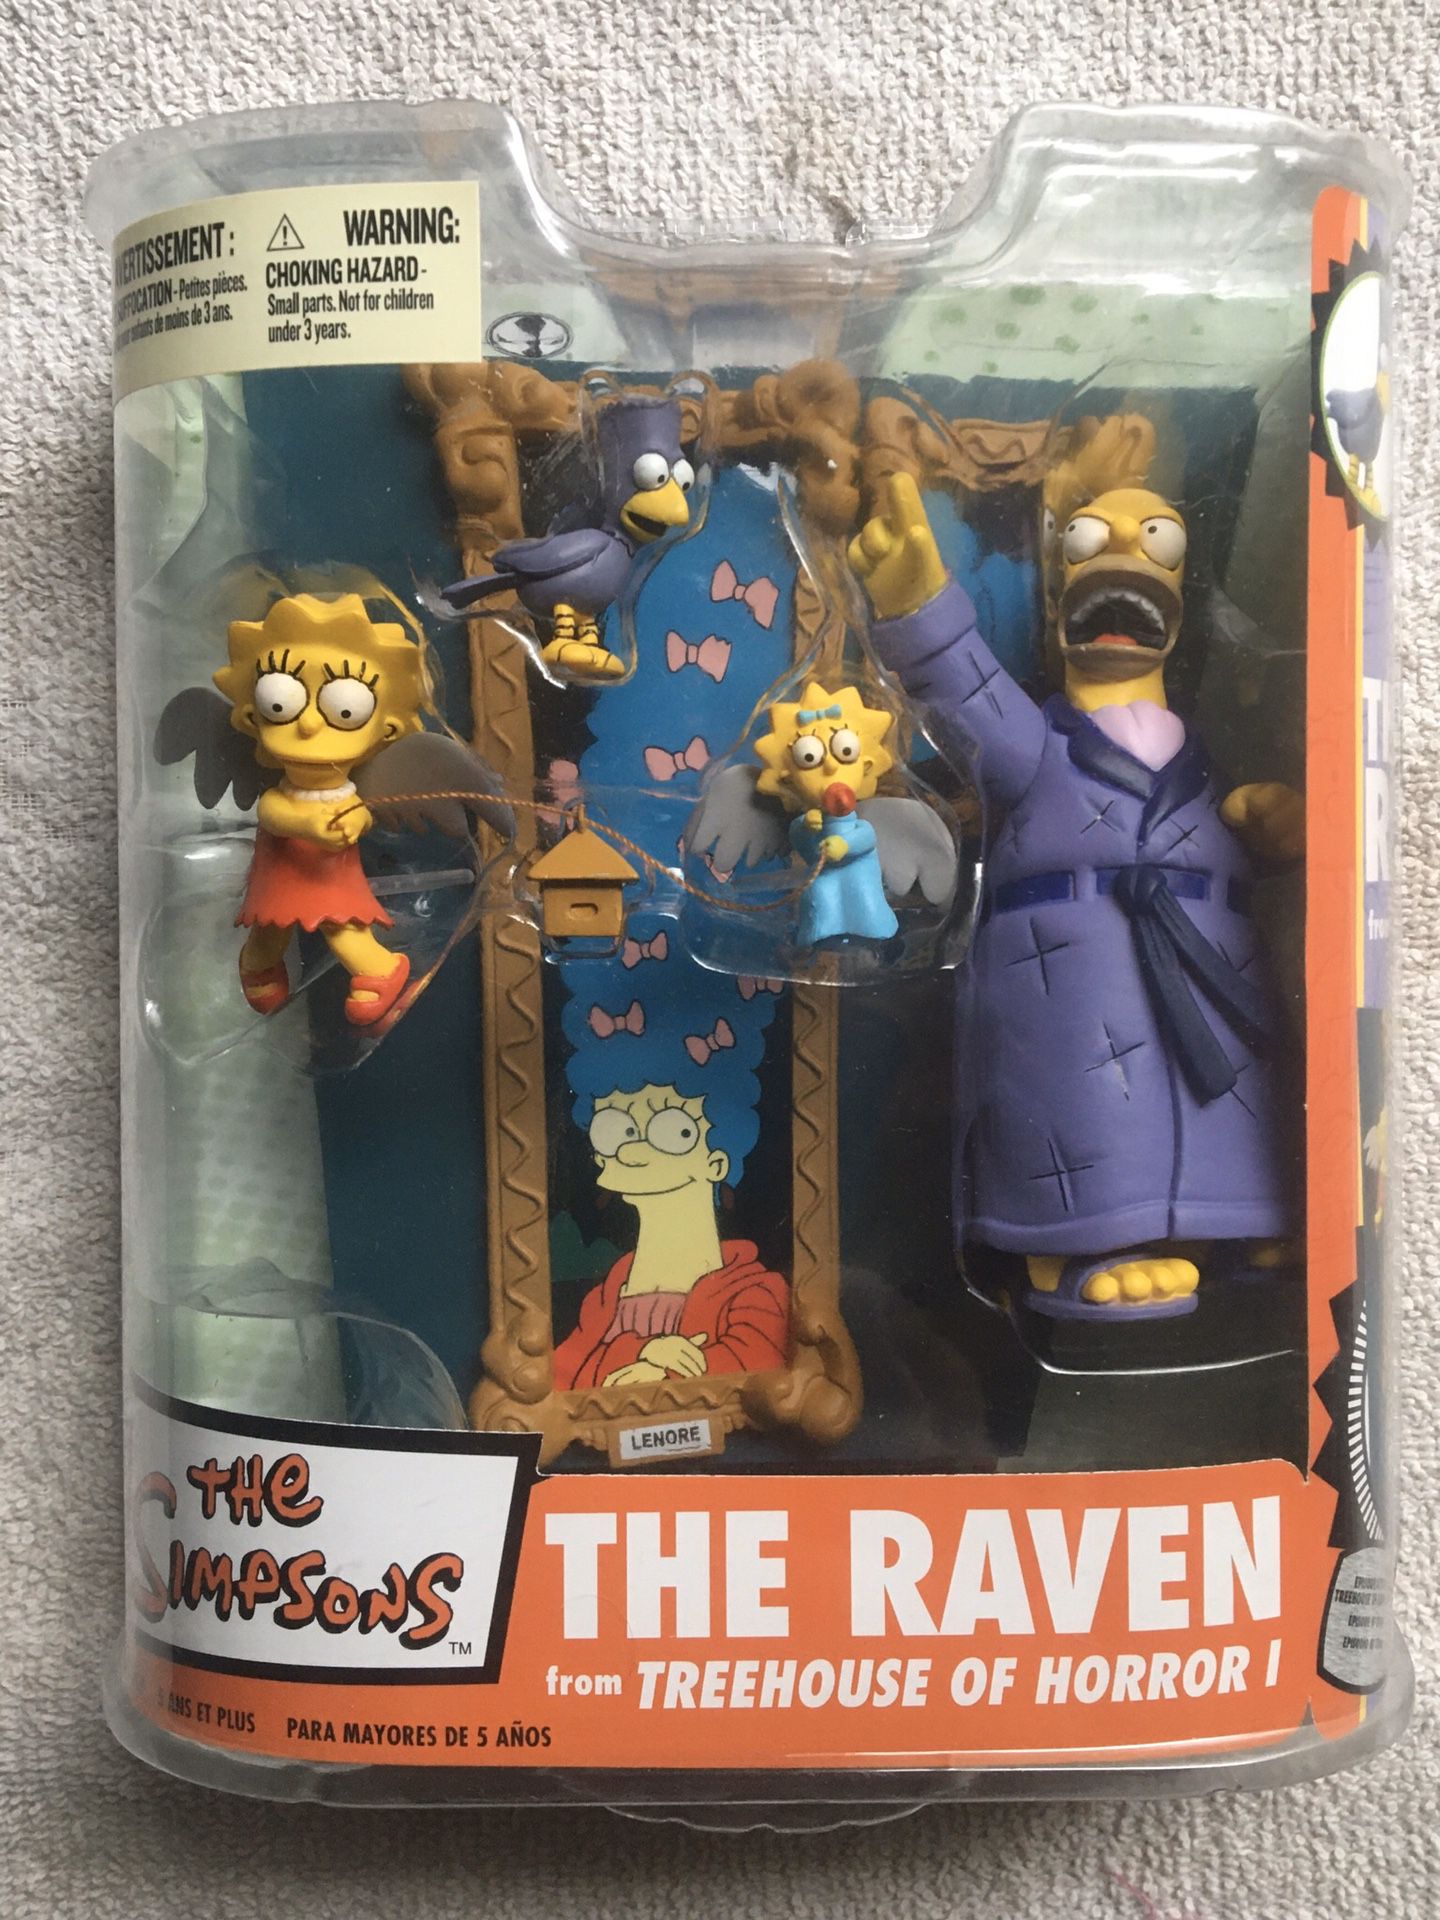 McFarlane Simpsons Figures